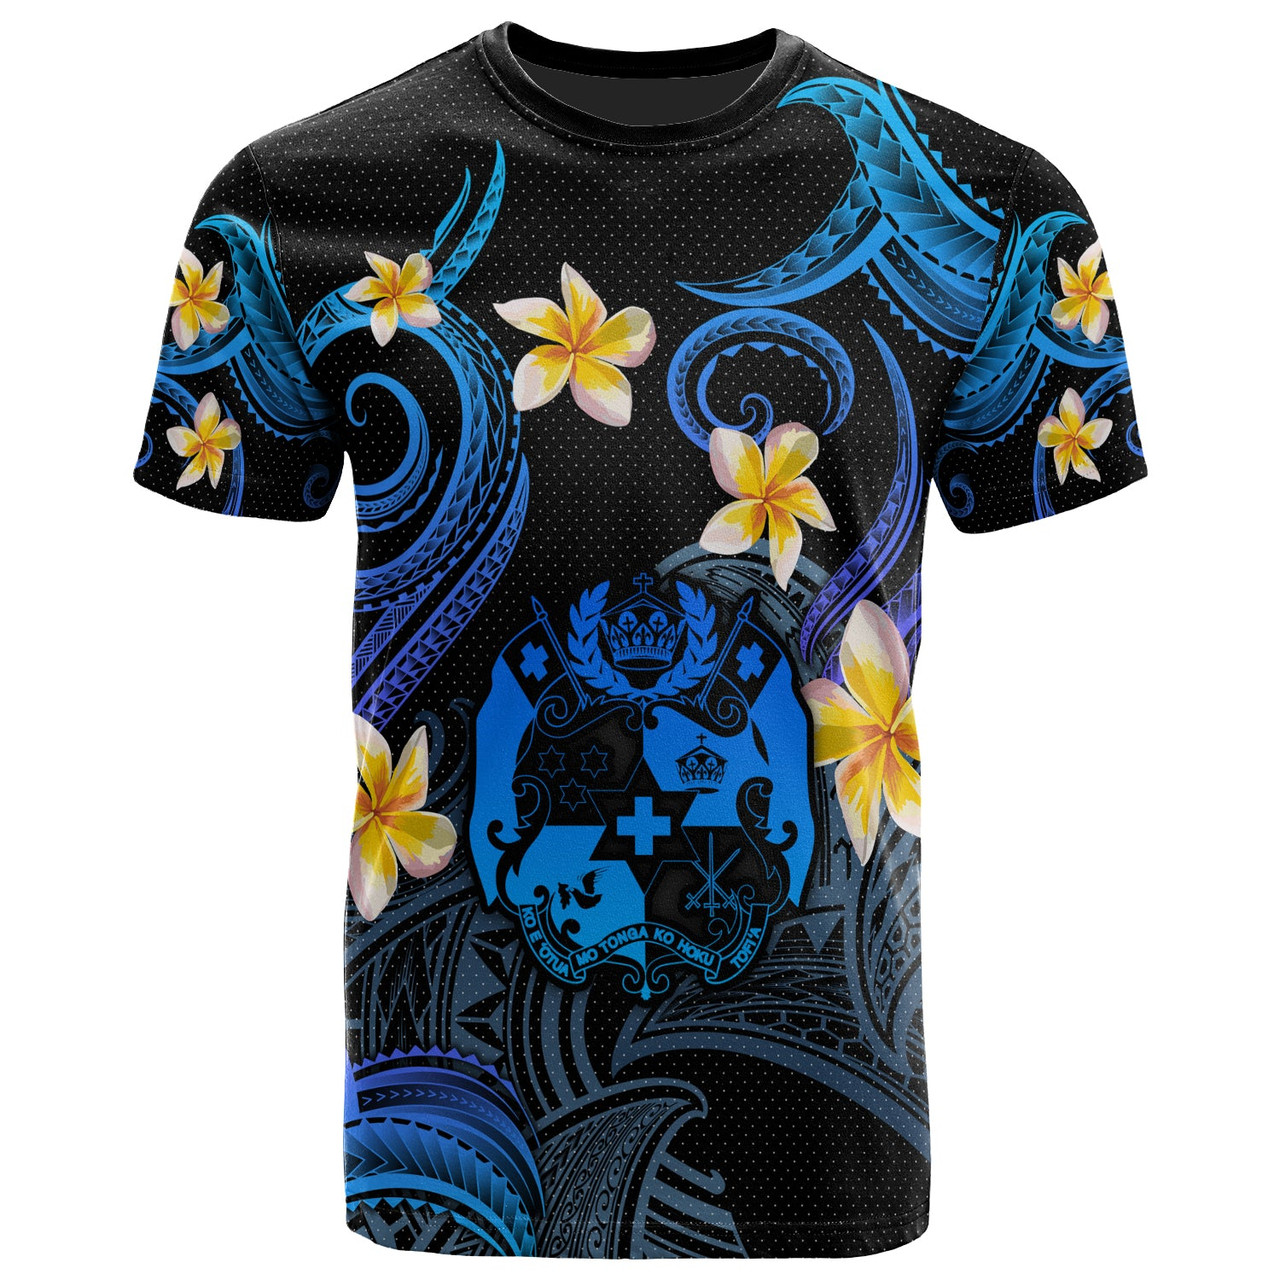 Tonga T-shirt - Custom Personalised Polynesian Waves with Plumeria Flowers (Blue)